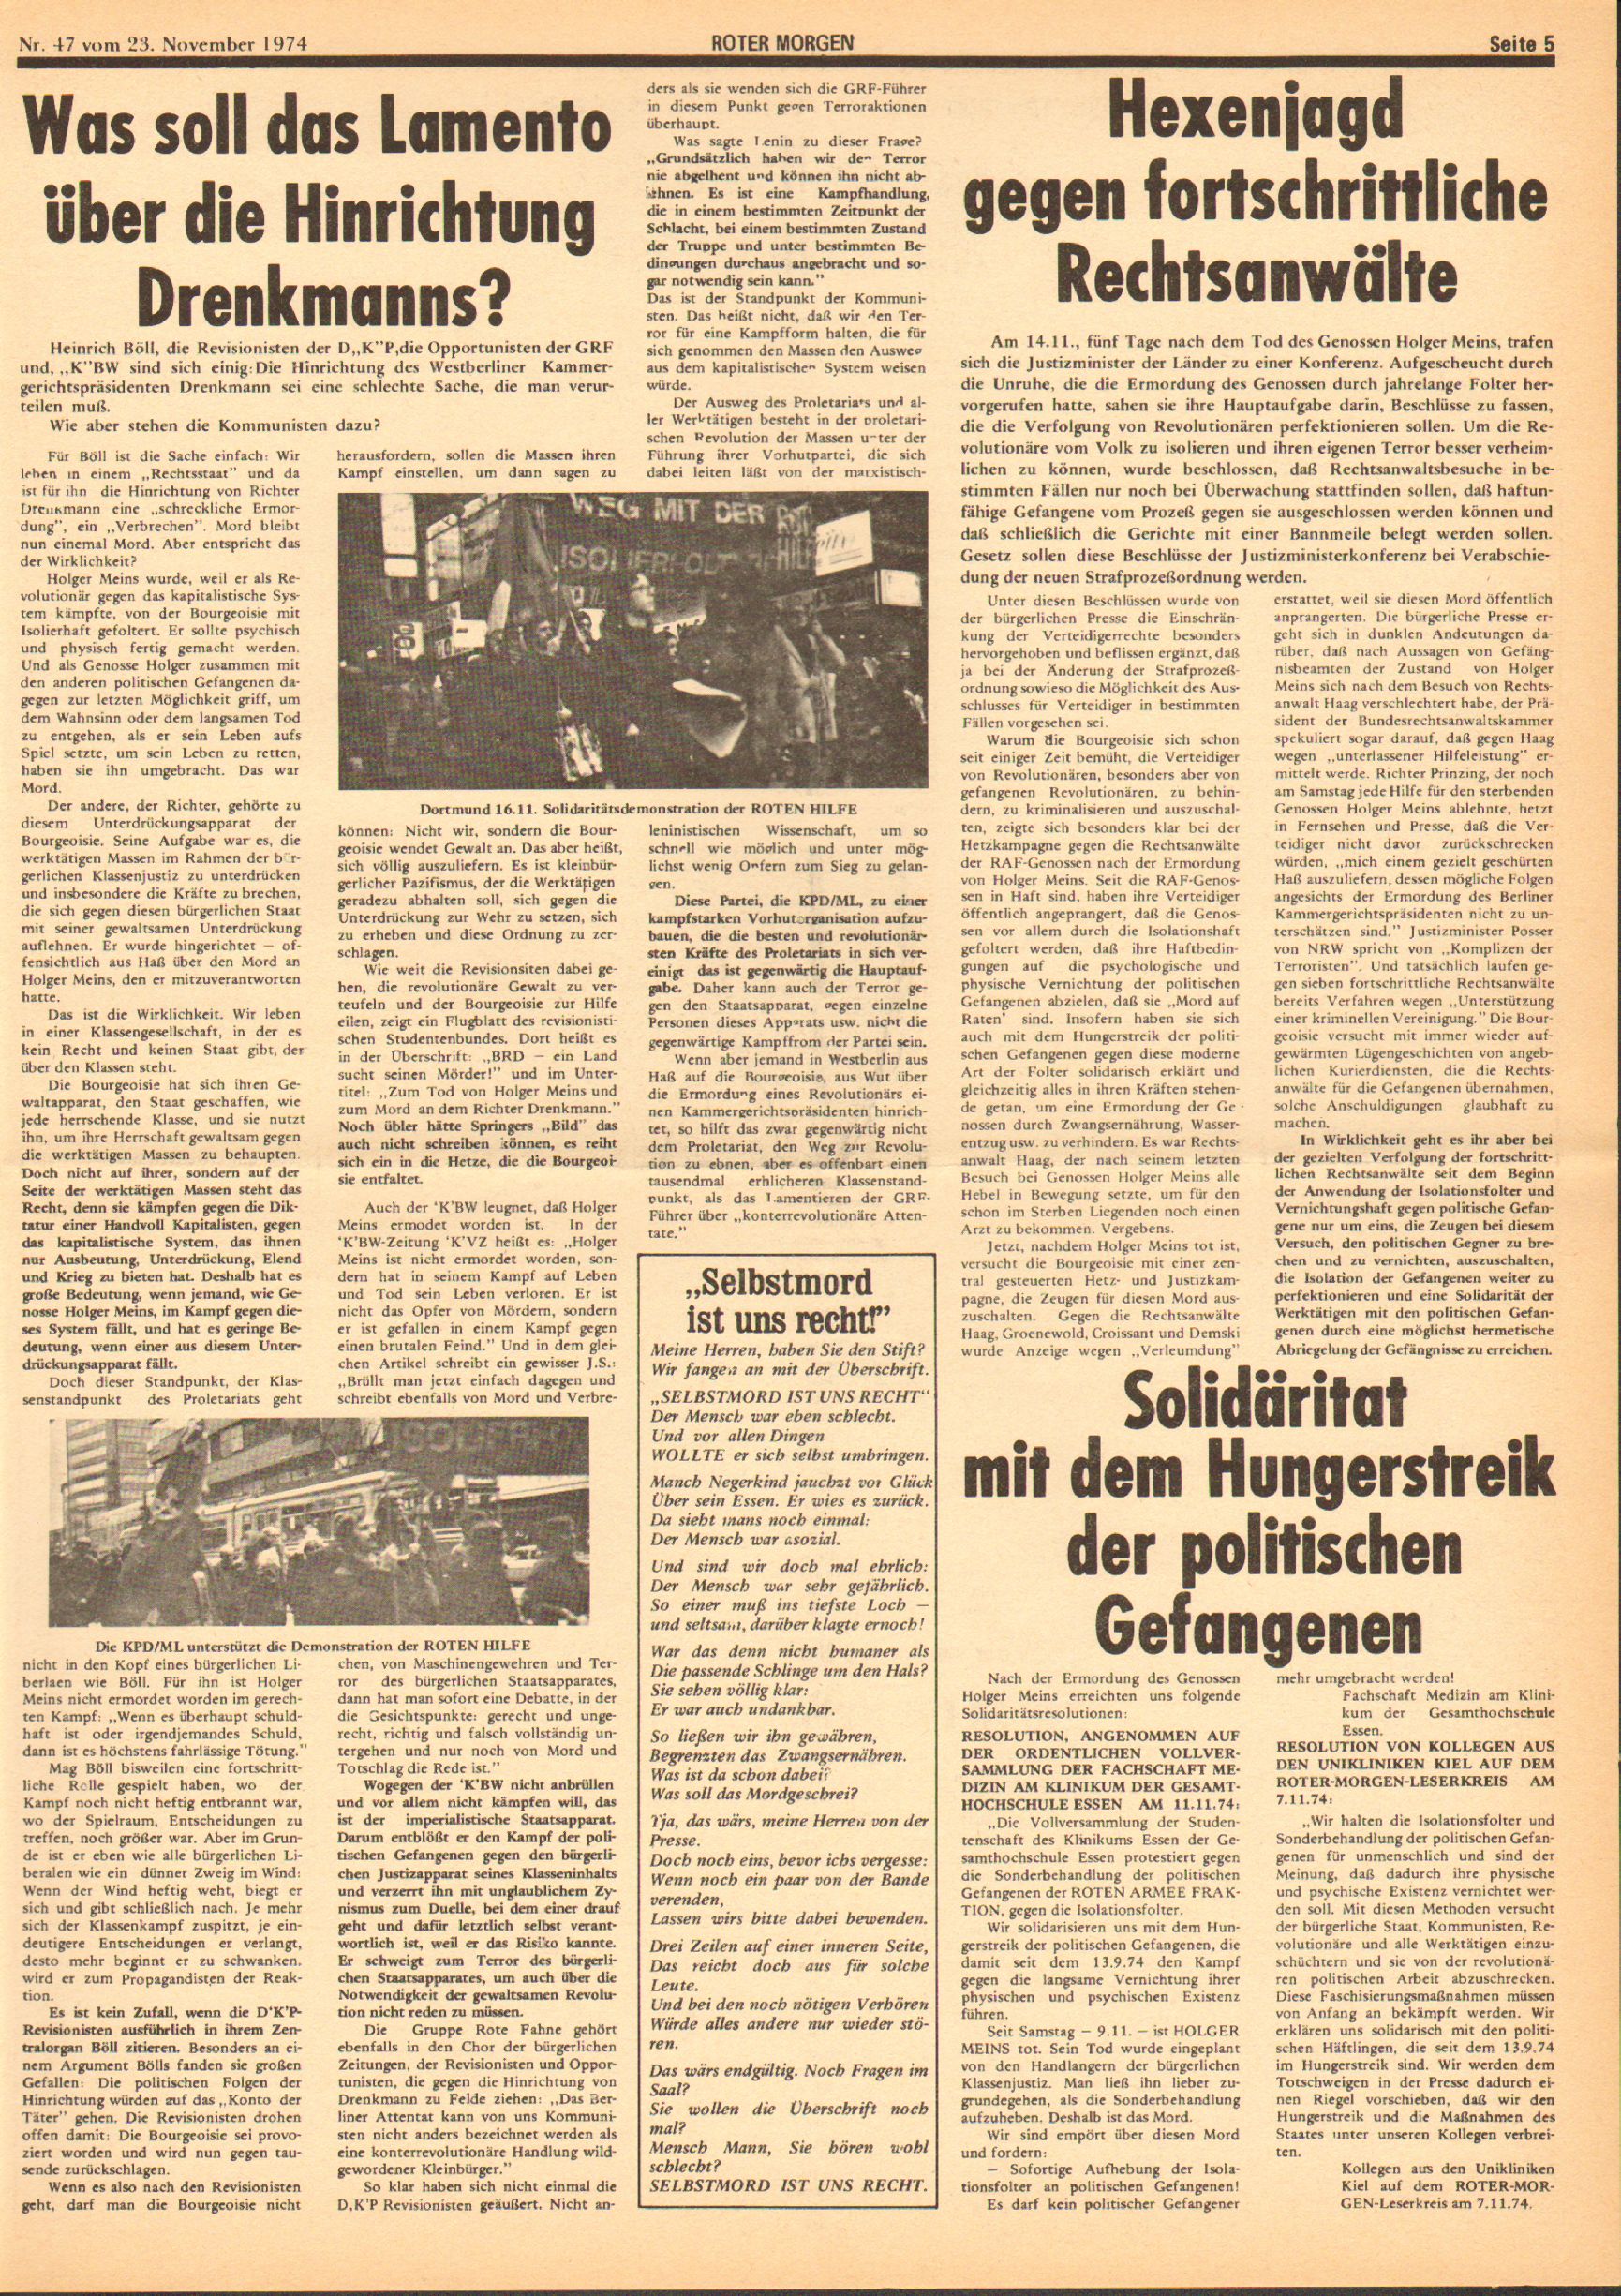 Roter Morgen, 8. Jg., 23. November 1974, Nr. 47, Seite 5